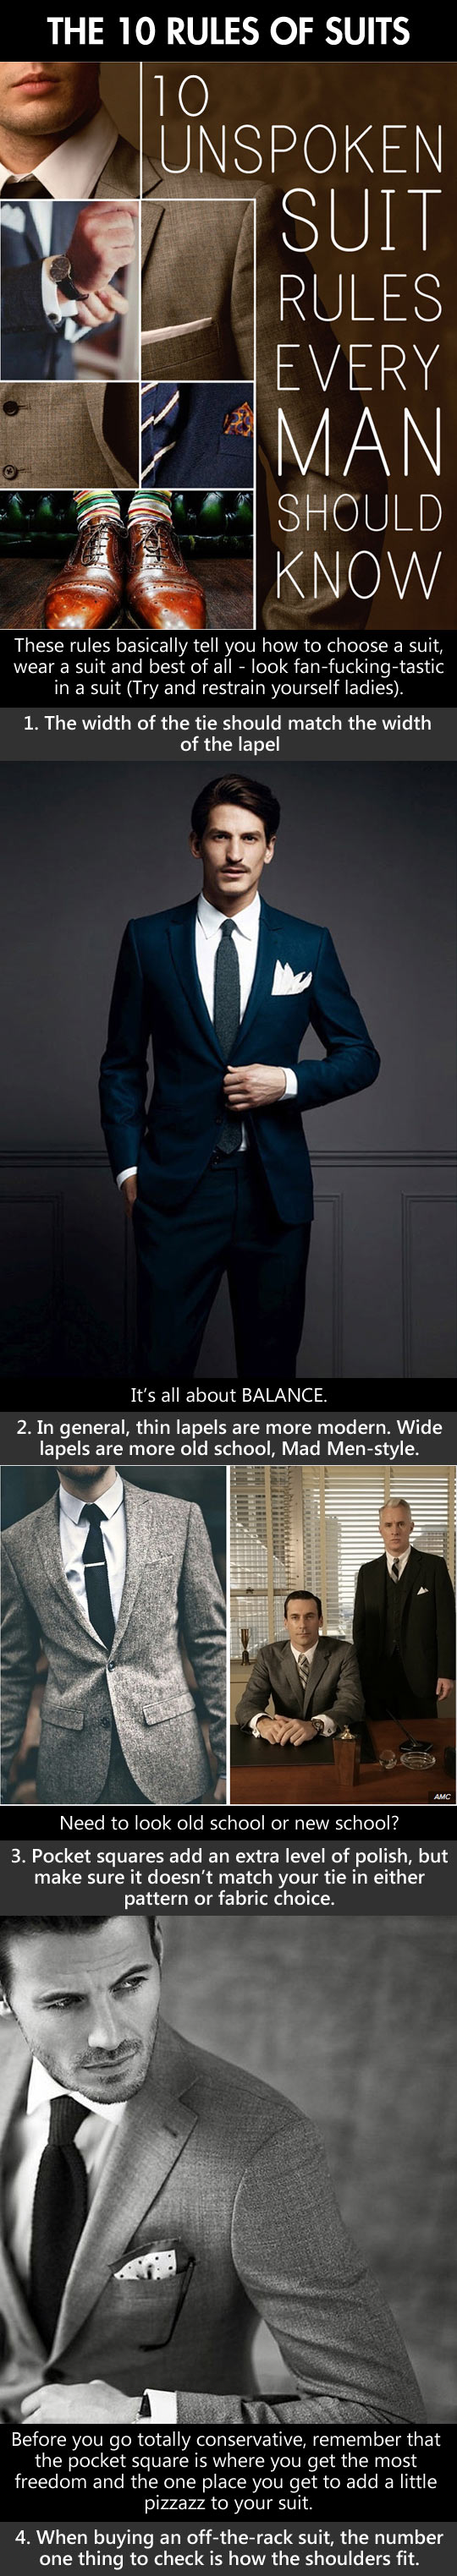 funny-suit-man-rules-shoes-tie (1)